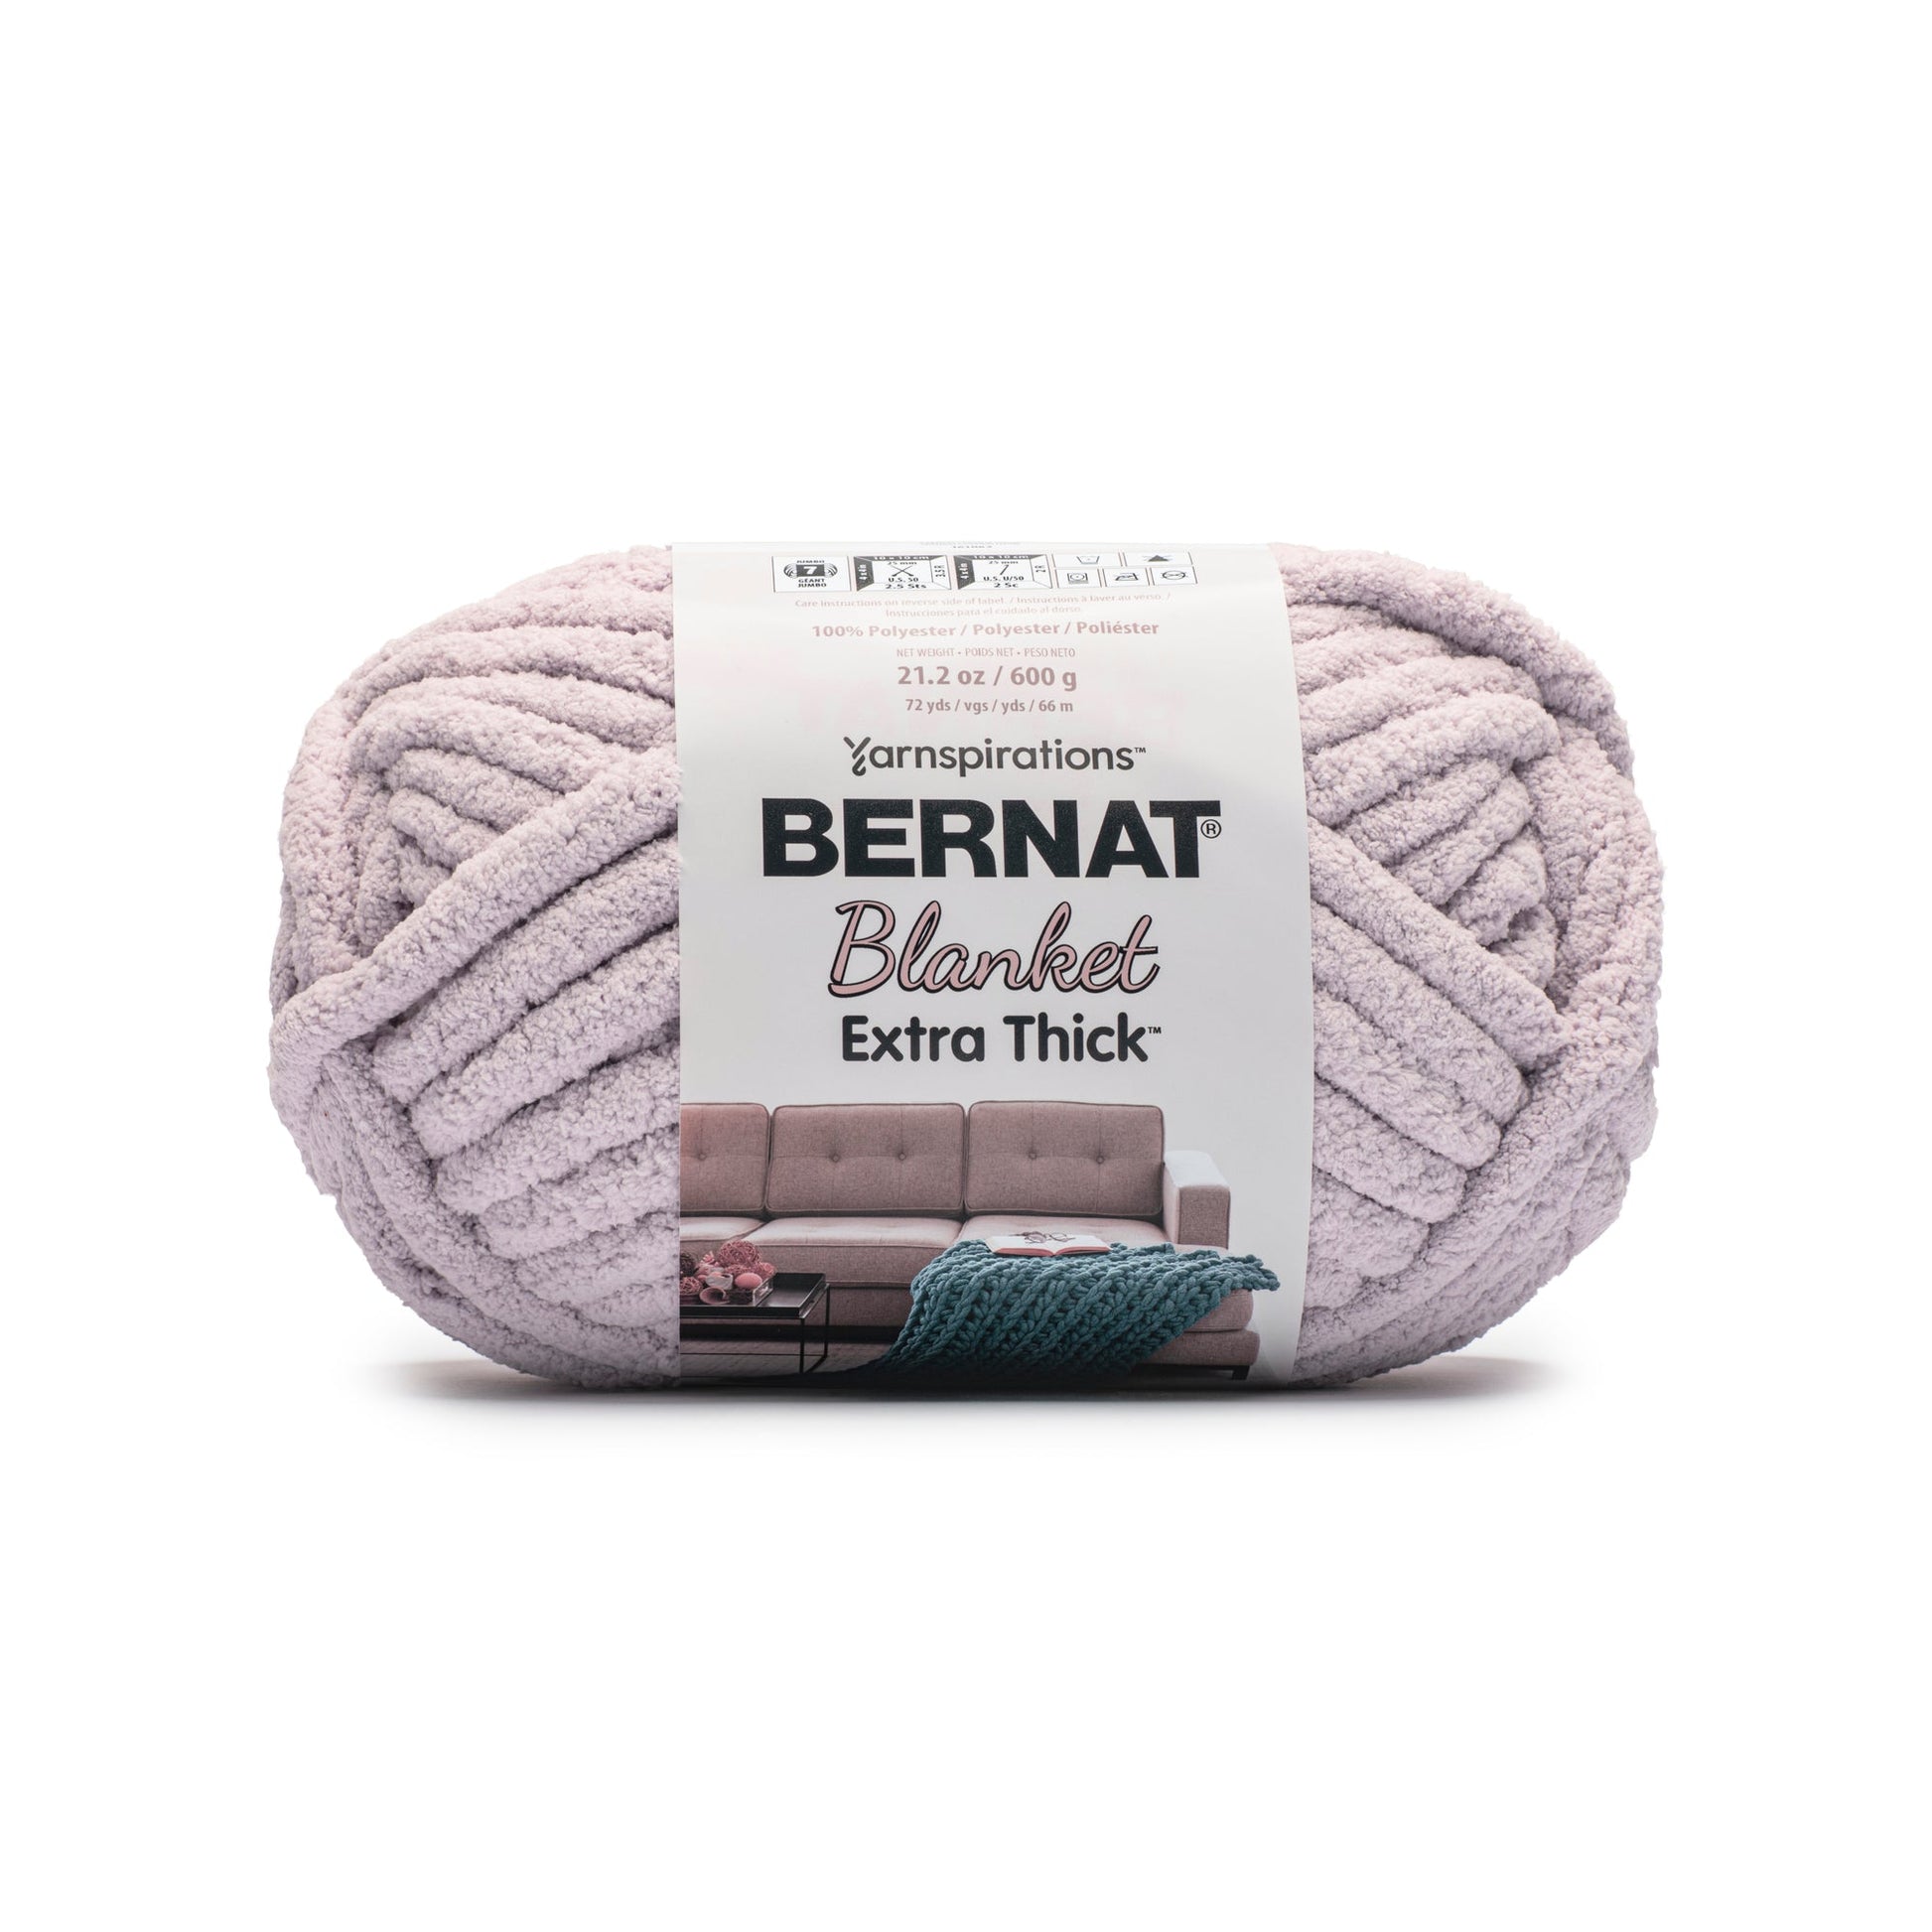 Bernat Blanket Extra Thick Yarn (600g/21.2oz) - Discontinued Shades Lilac Smoke